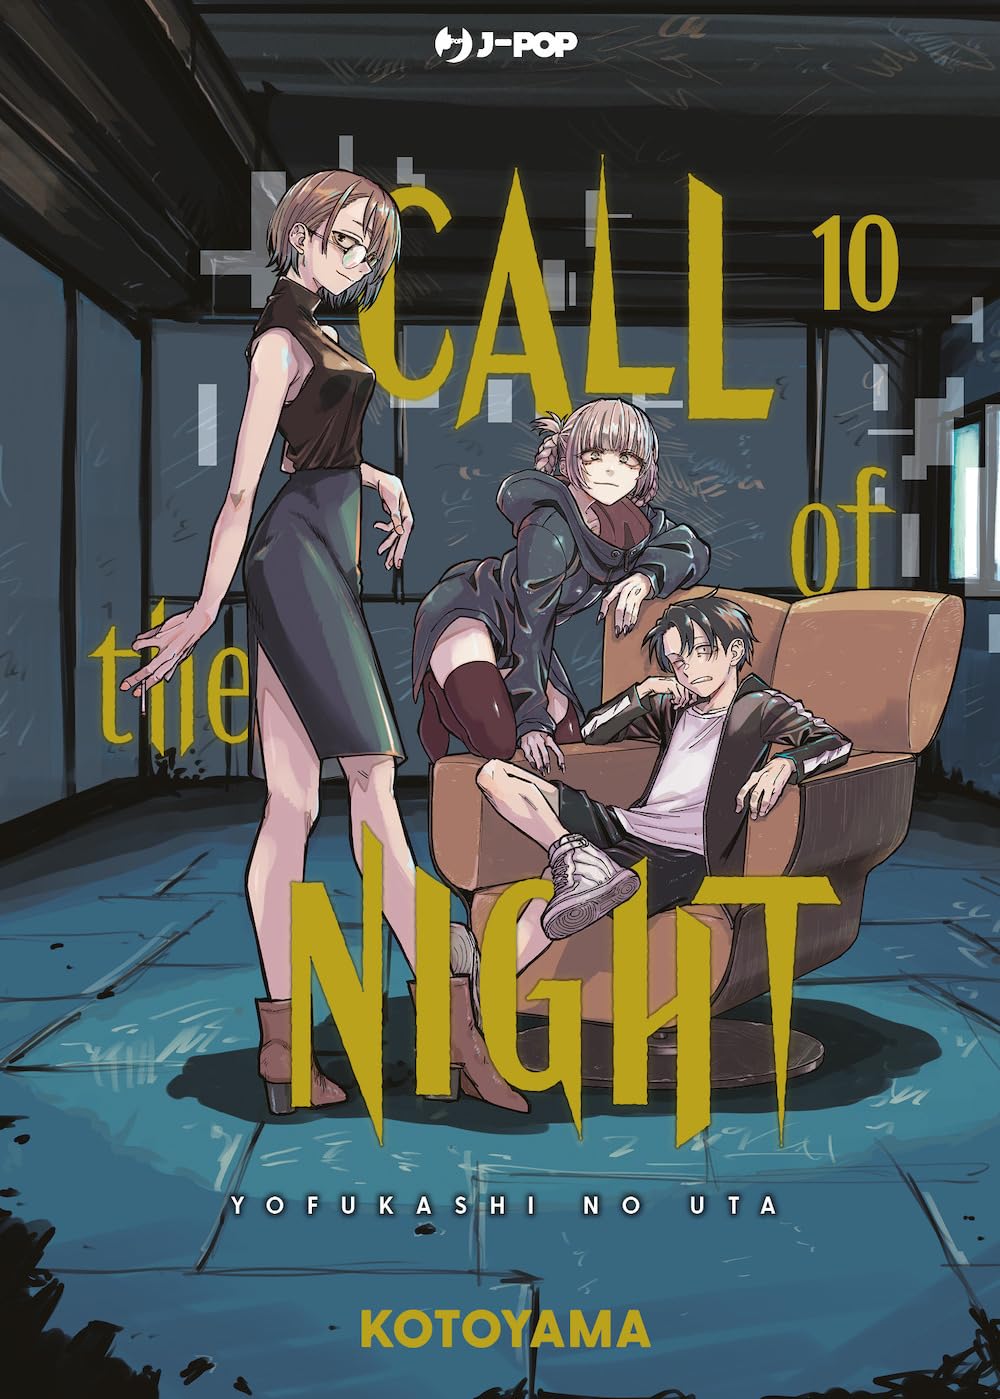 JPOP CALL OF THE NIGHT #010